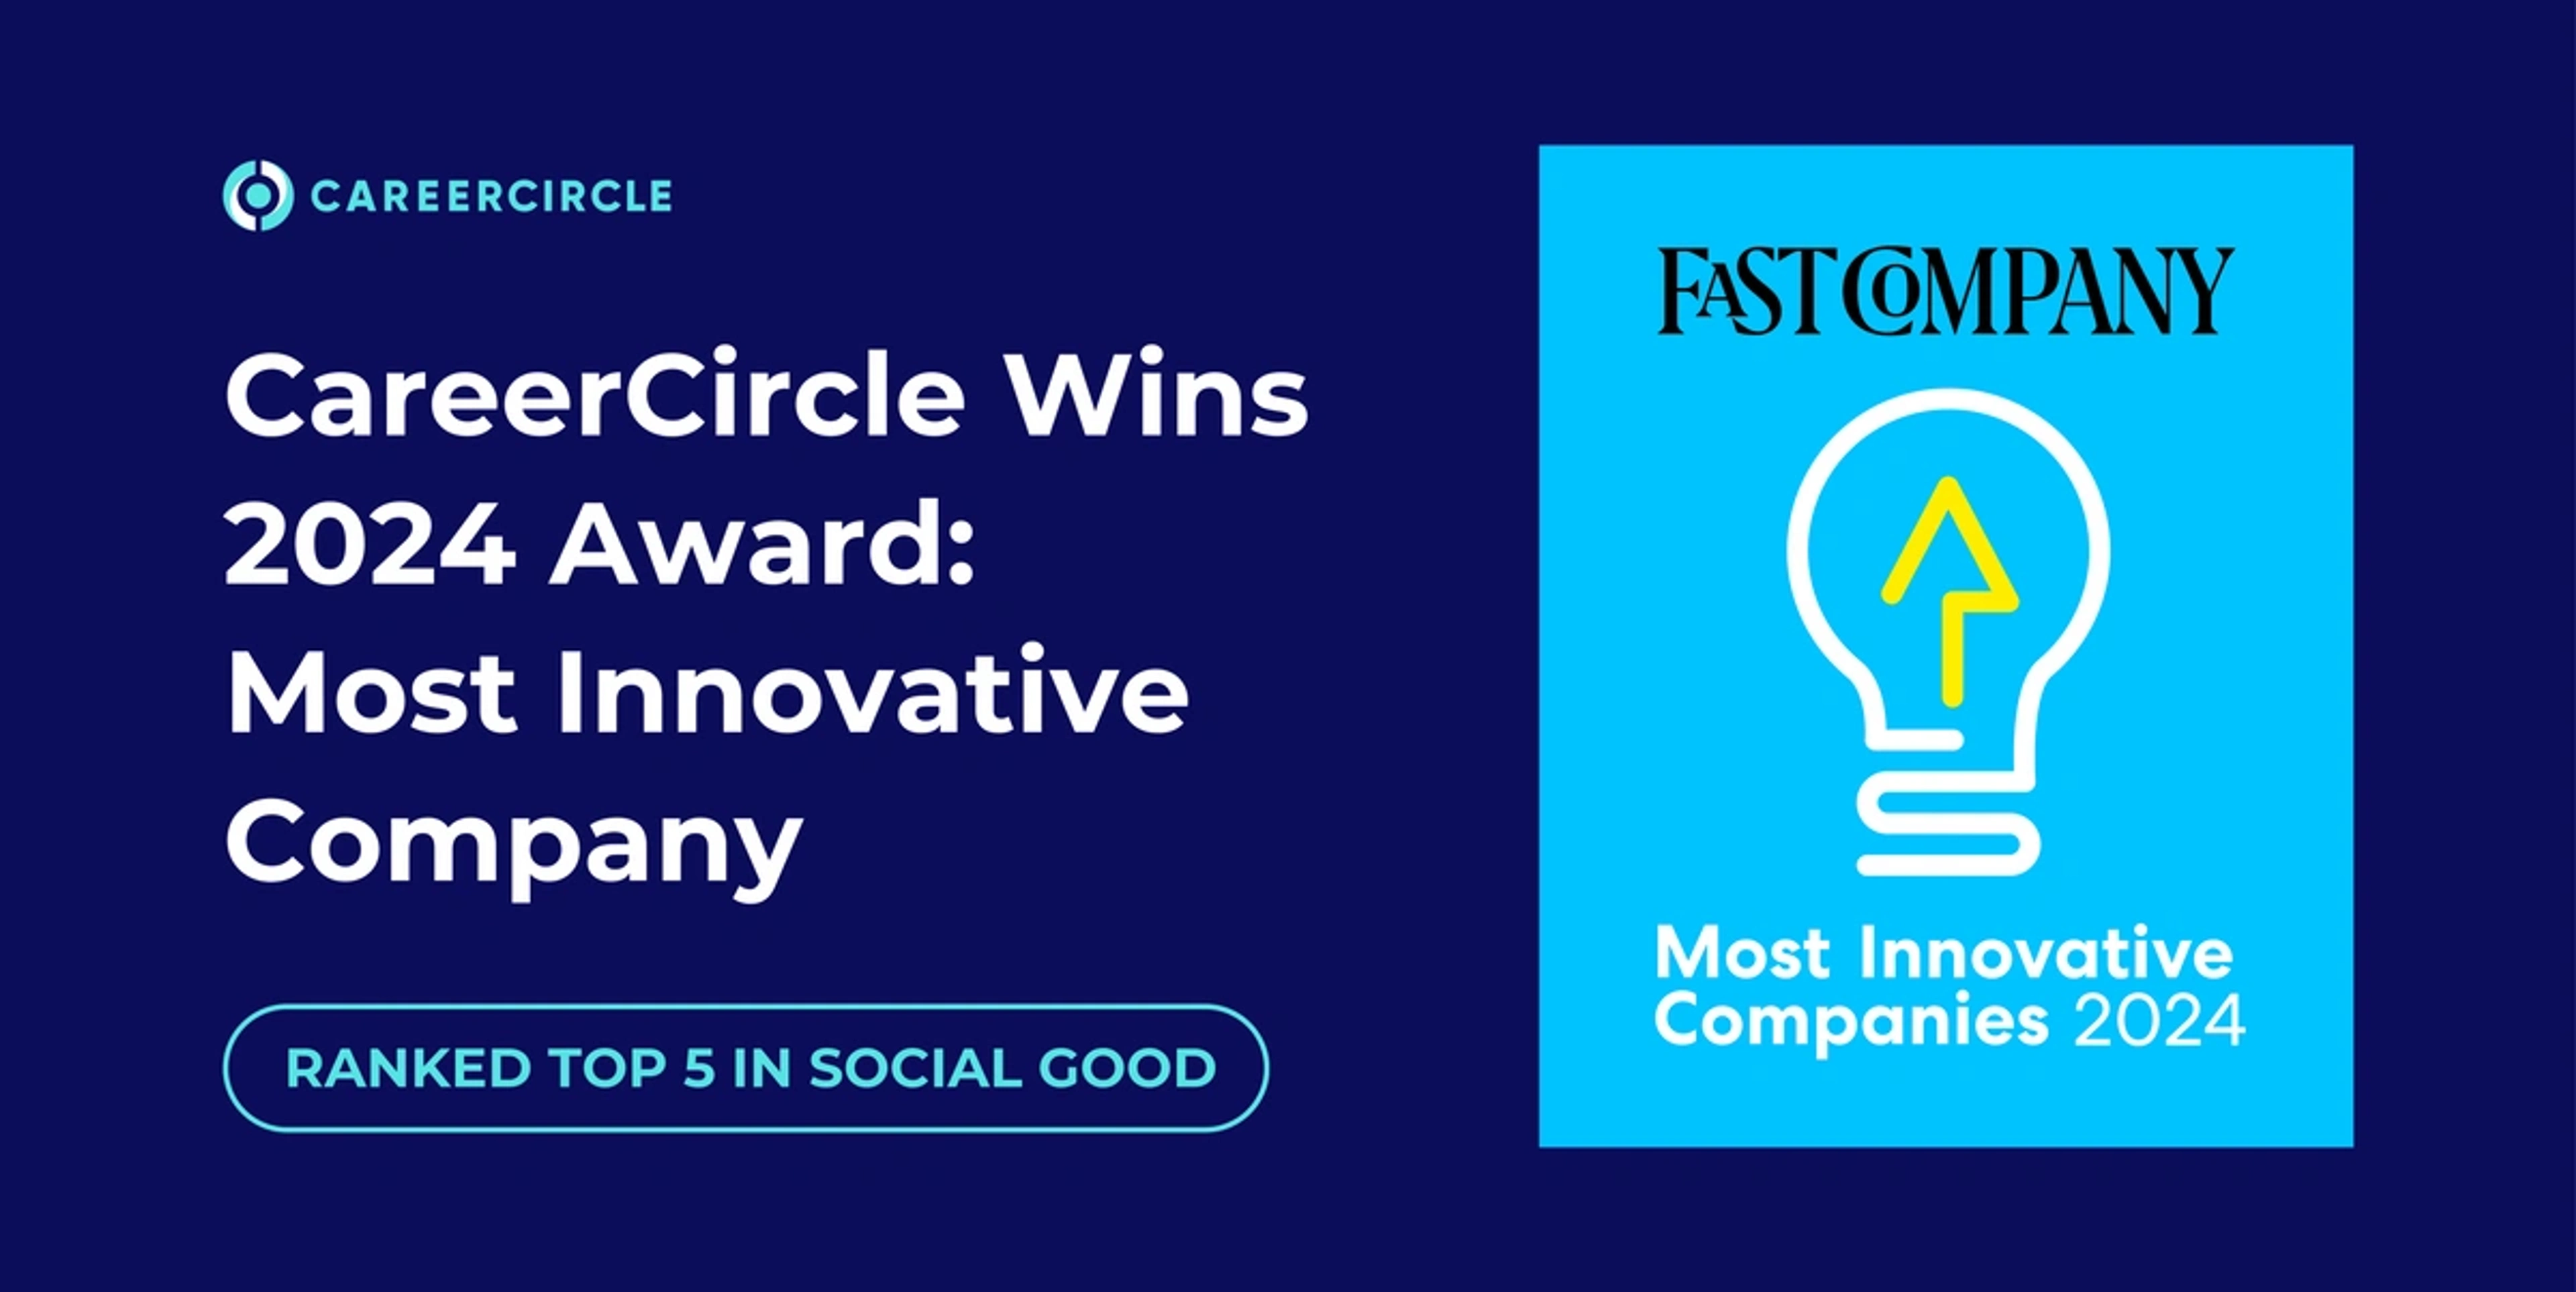 CareerCircle Wins 2024 Award: Most Innovative Company for Social Good